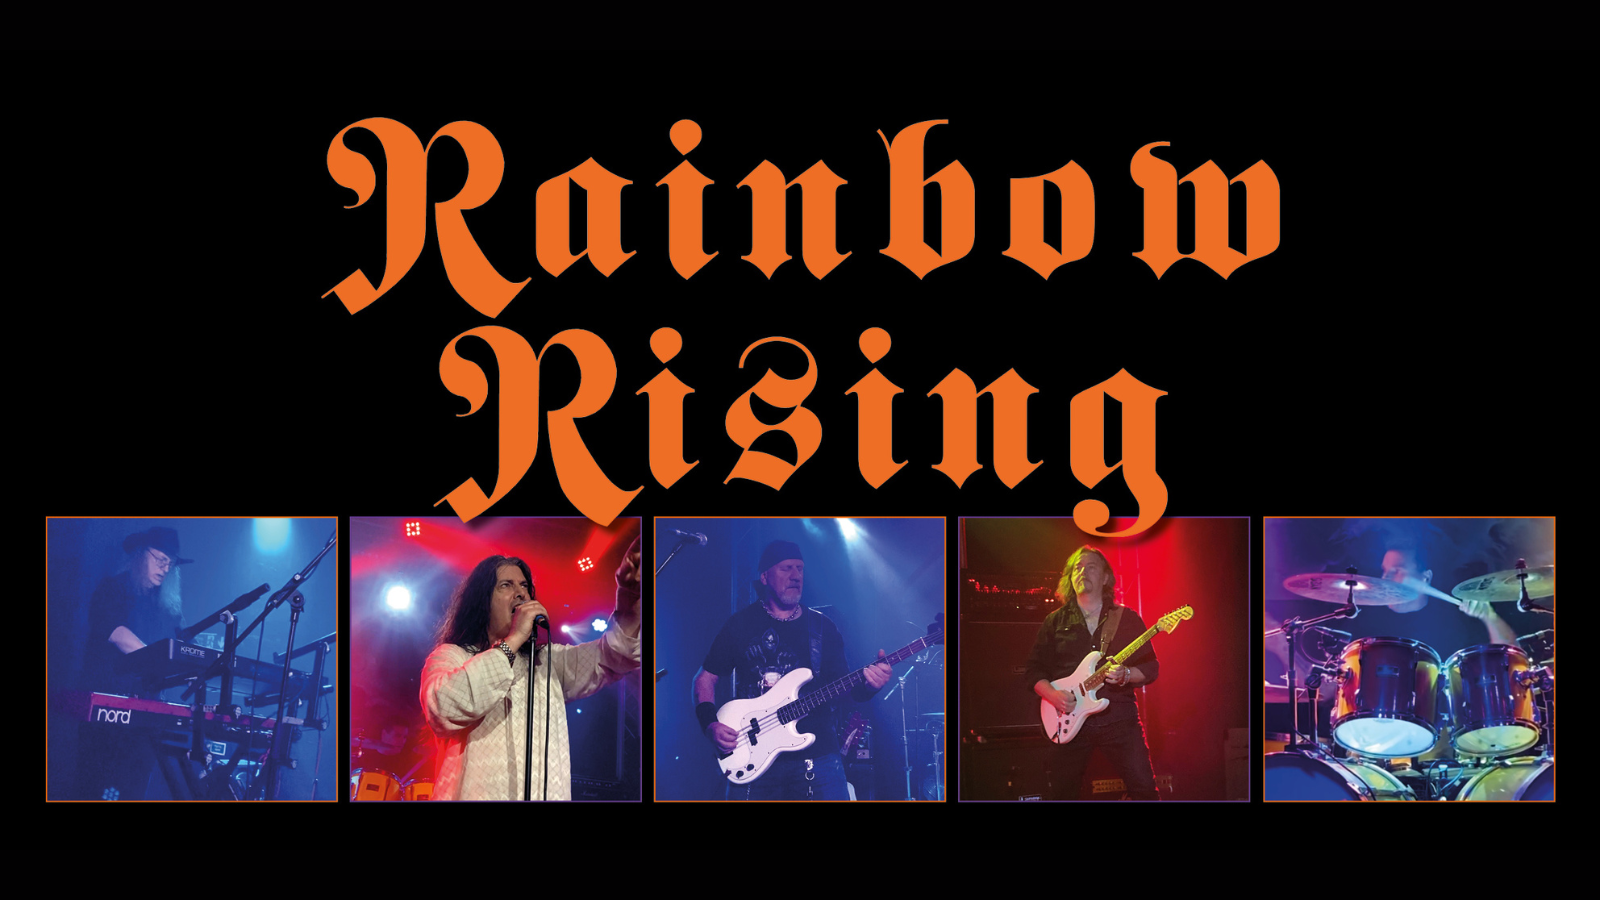 Rainbow - Rising